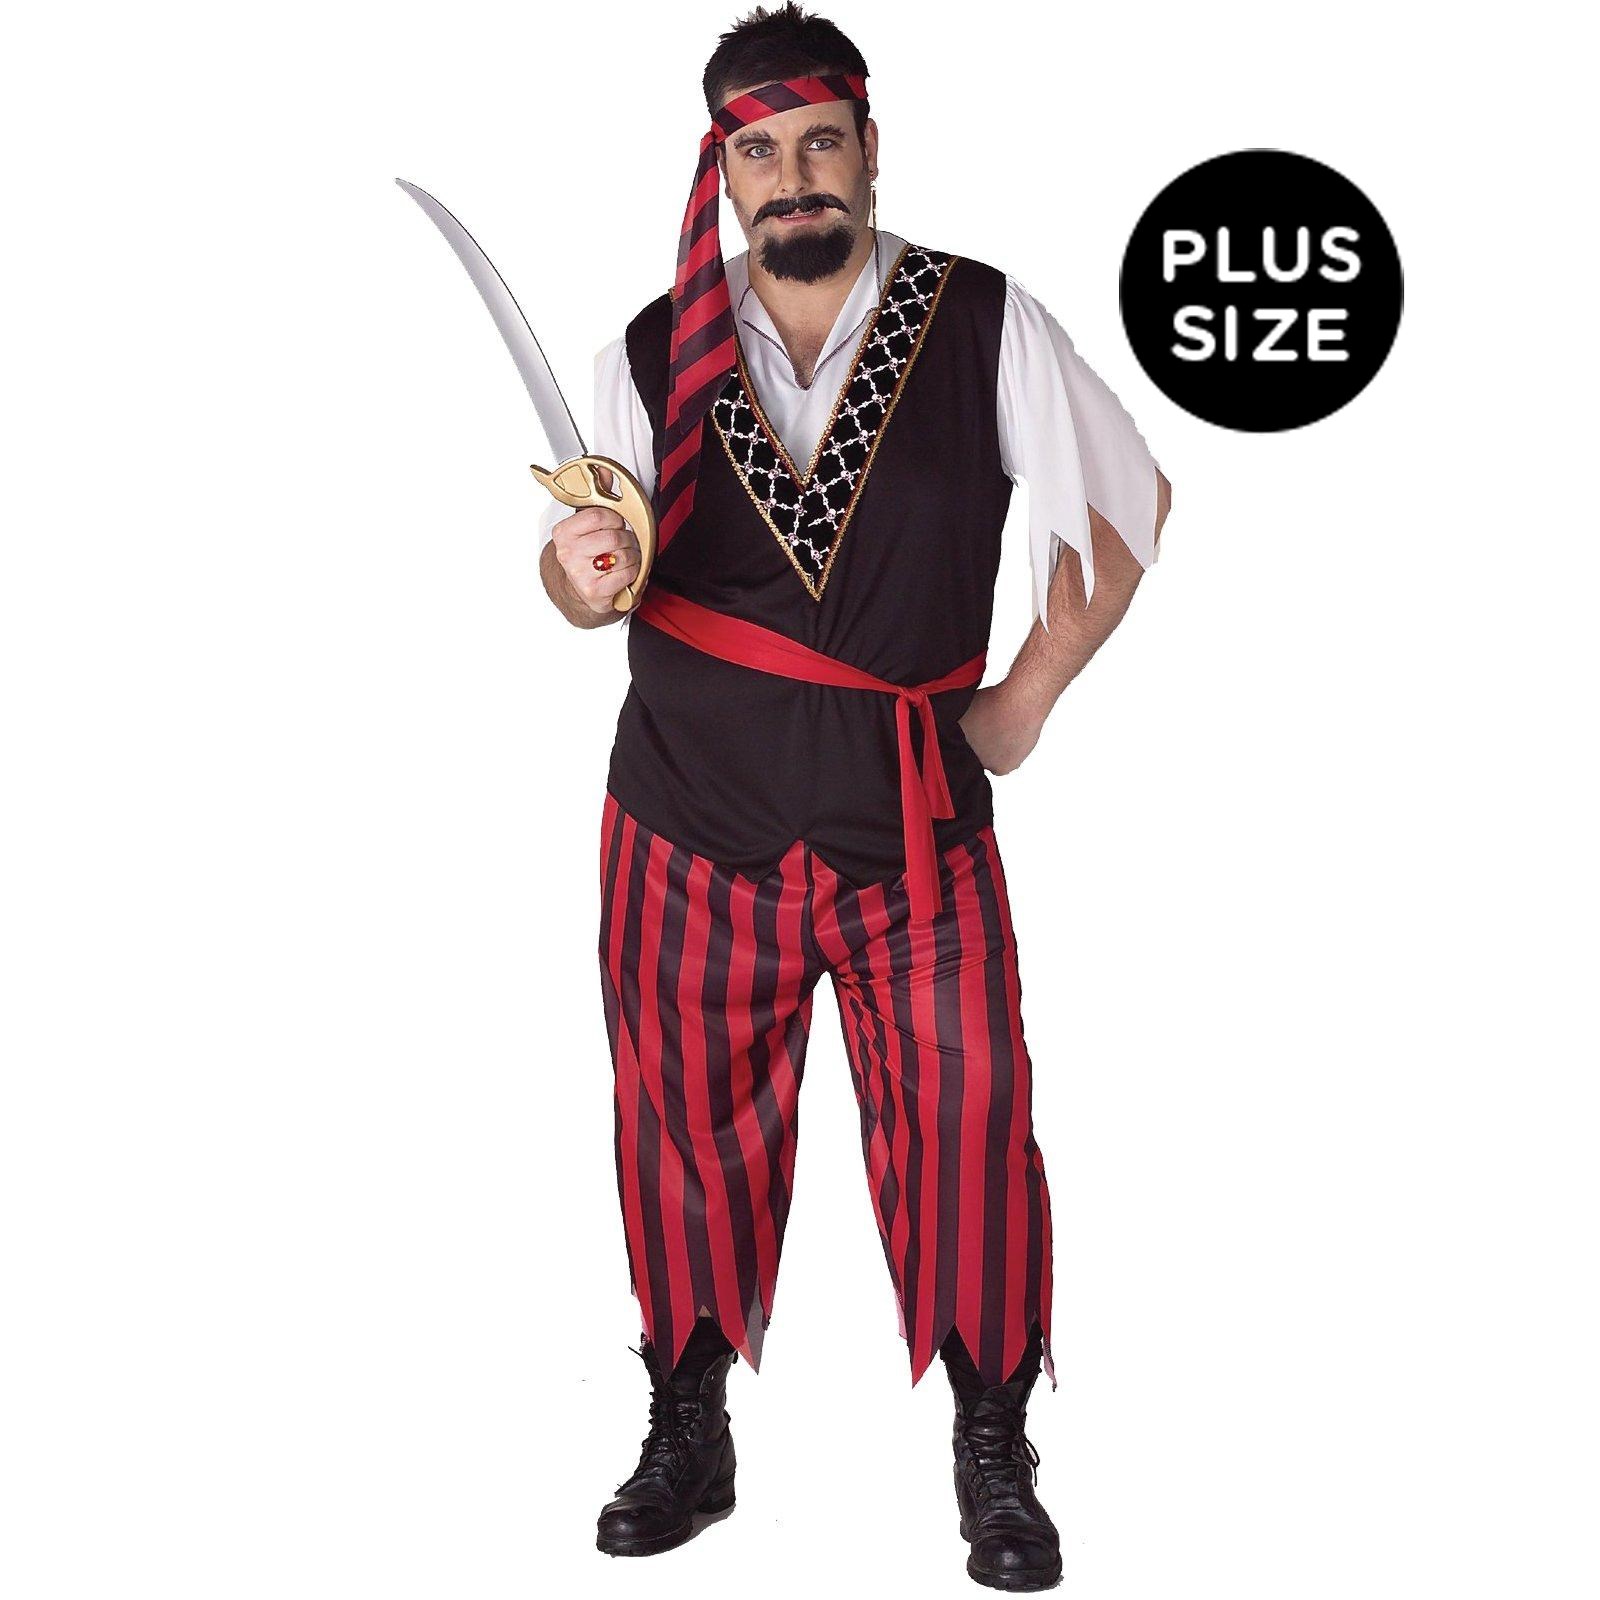 Pirate Plus Size Adult Costume